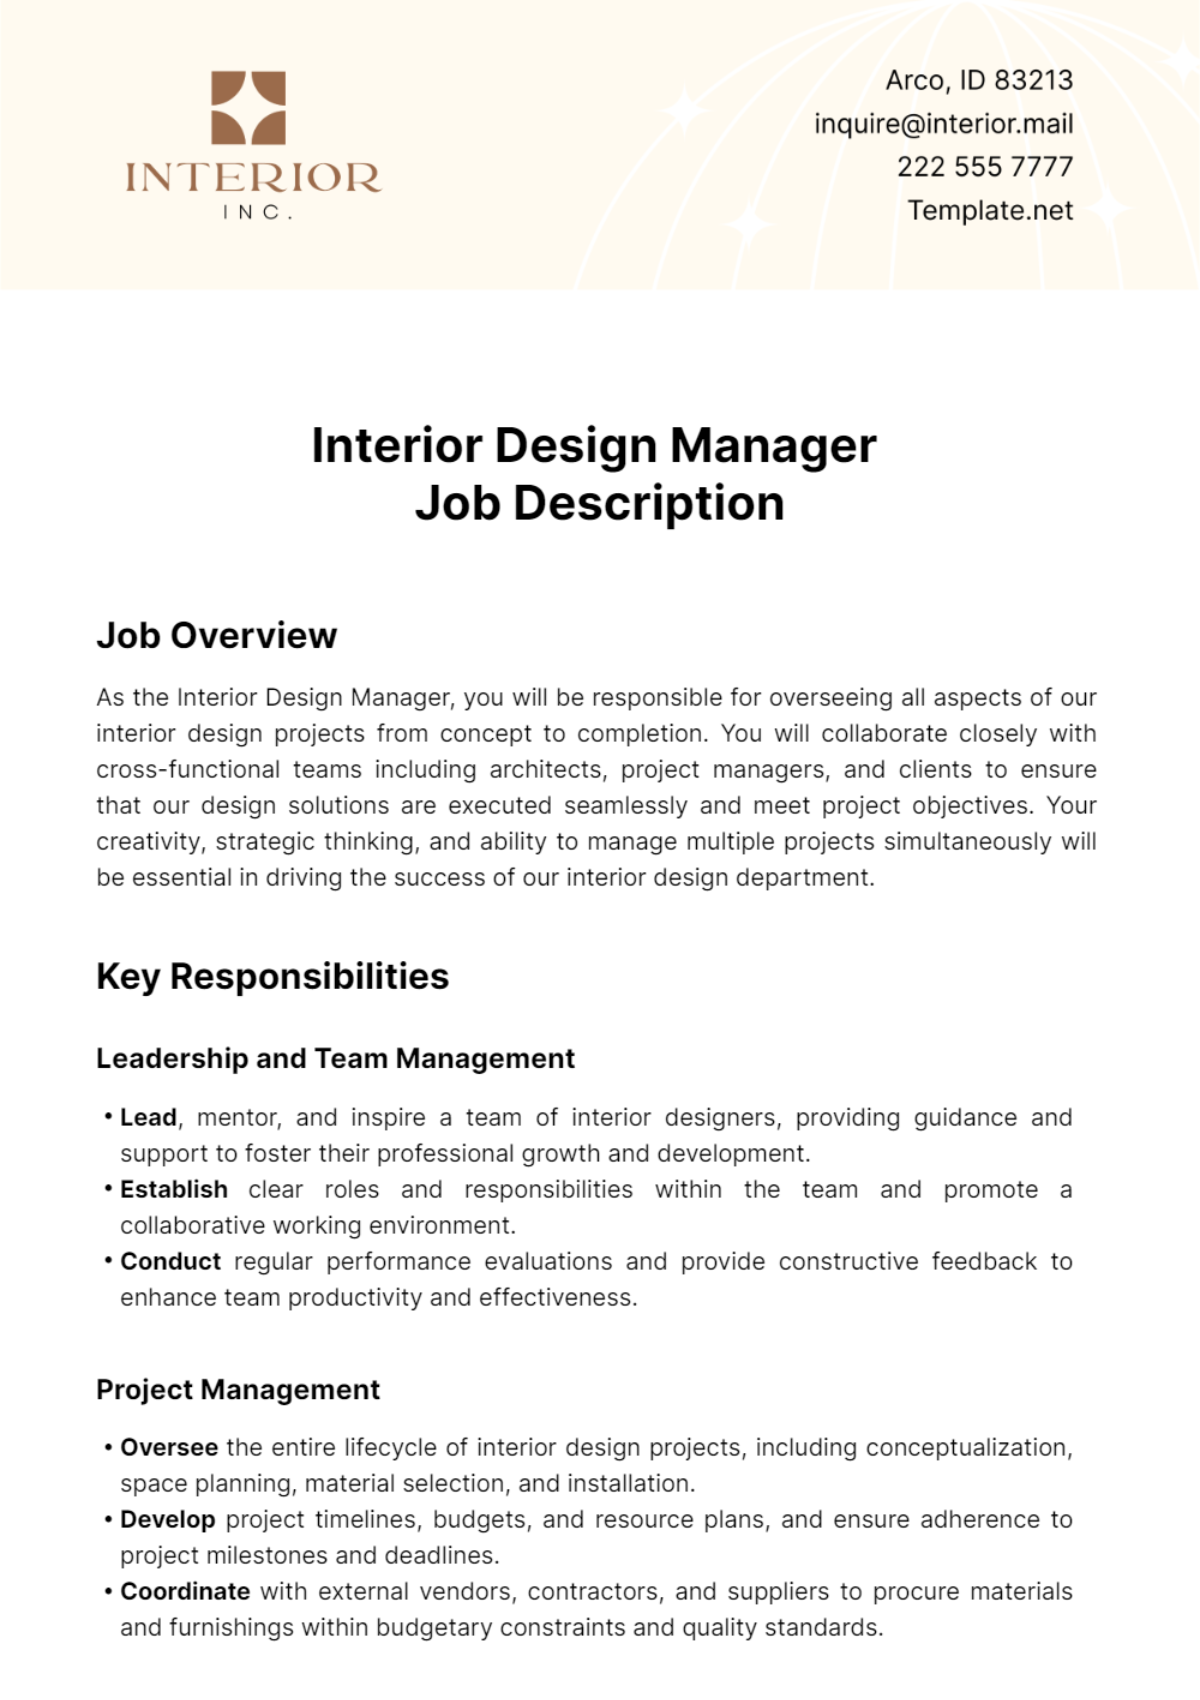 Free Interior Design Manager Job Description Template